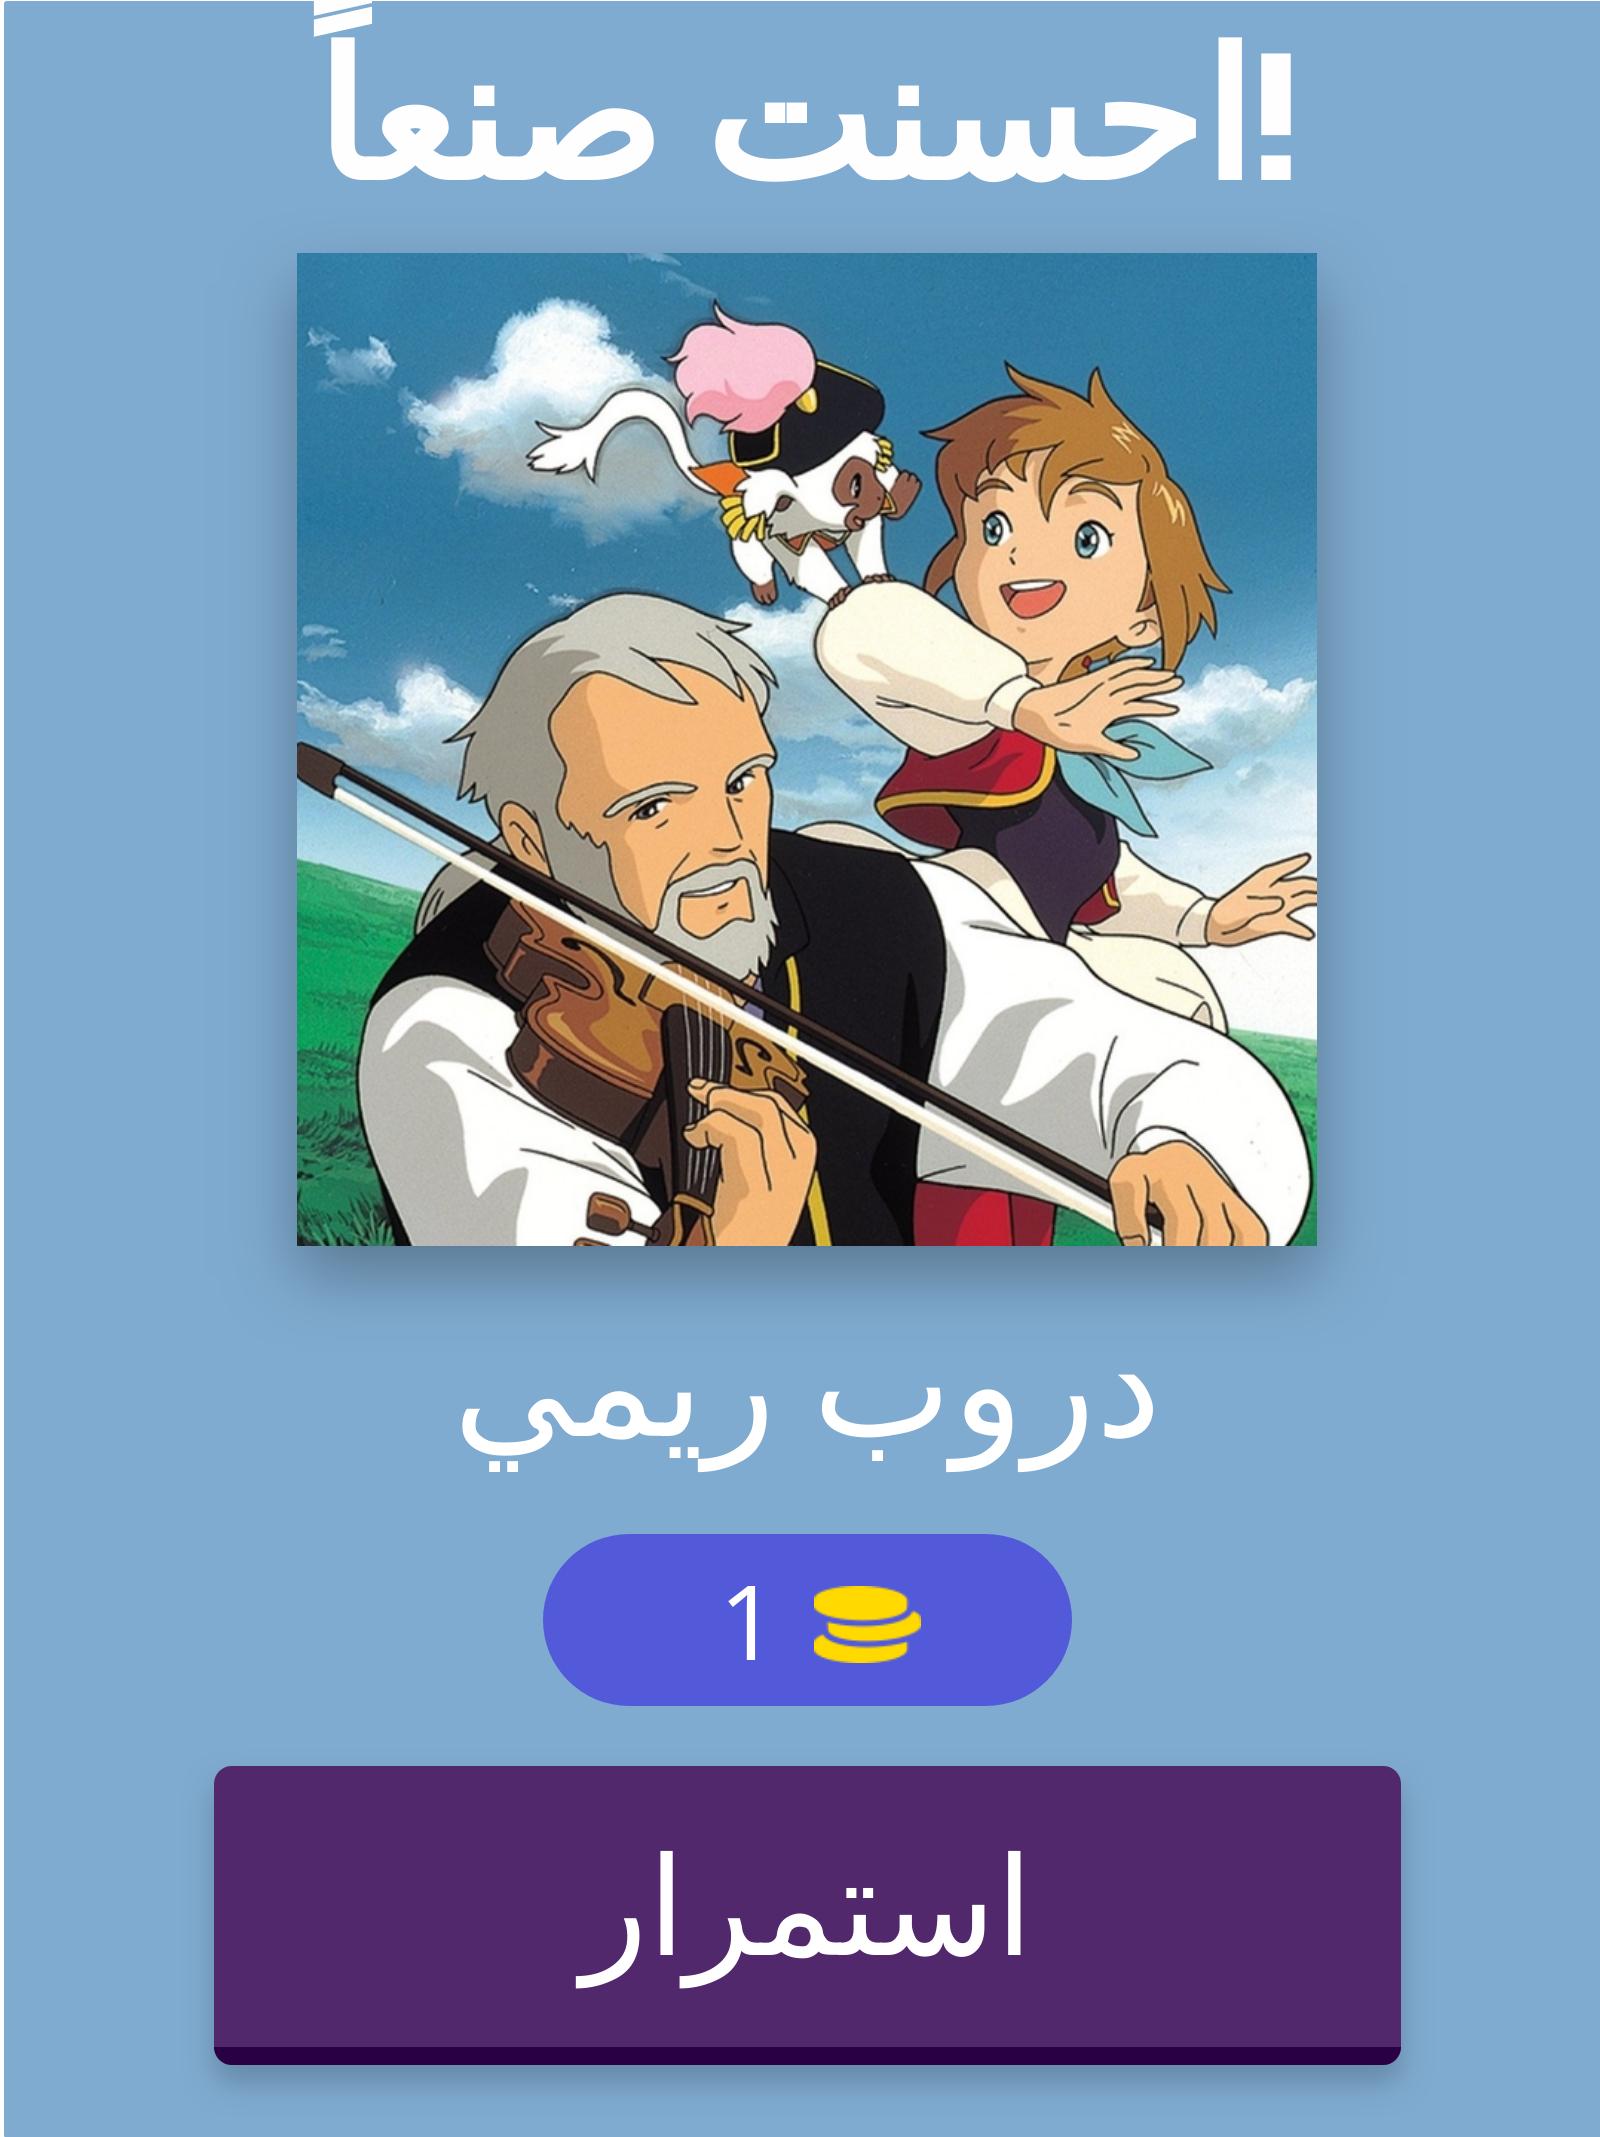 QUIZLOGO - Arabic Toon 8.4.3z Screenshot 9